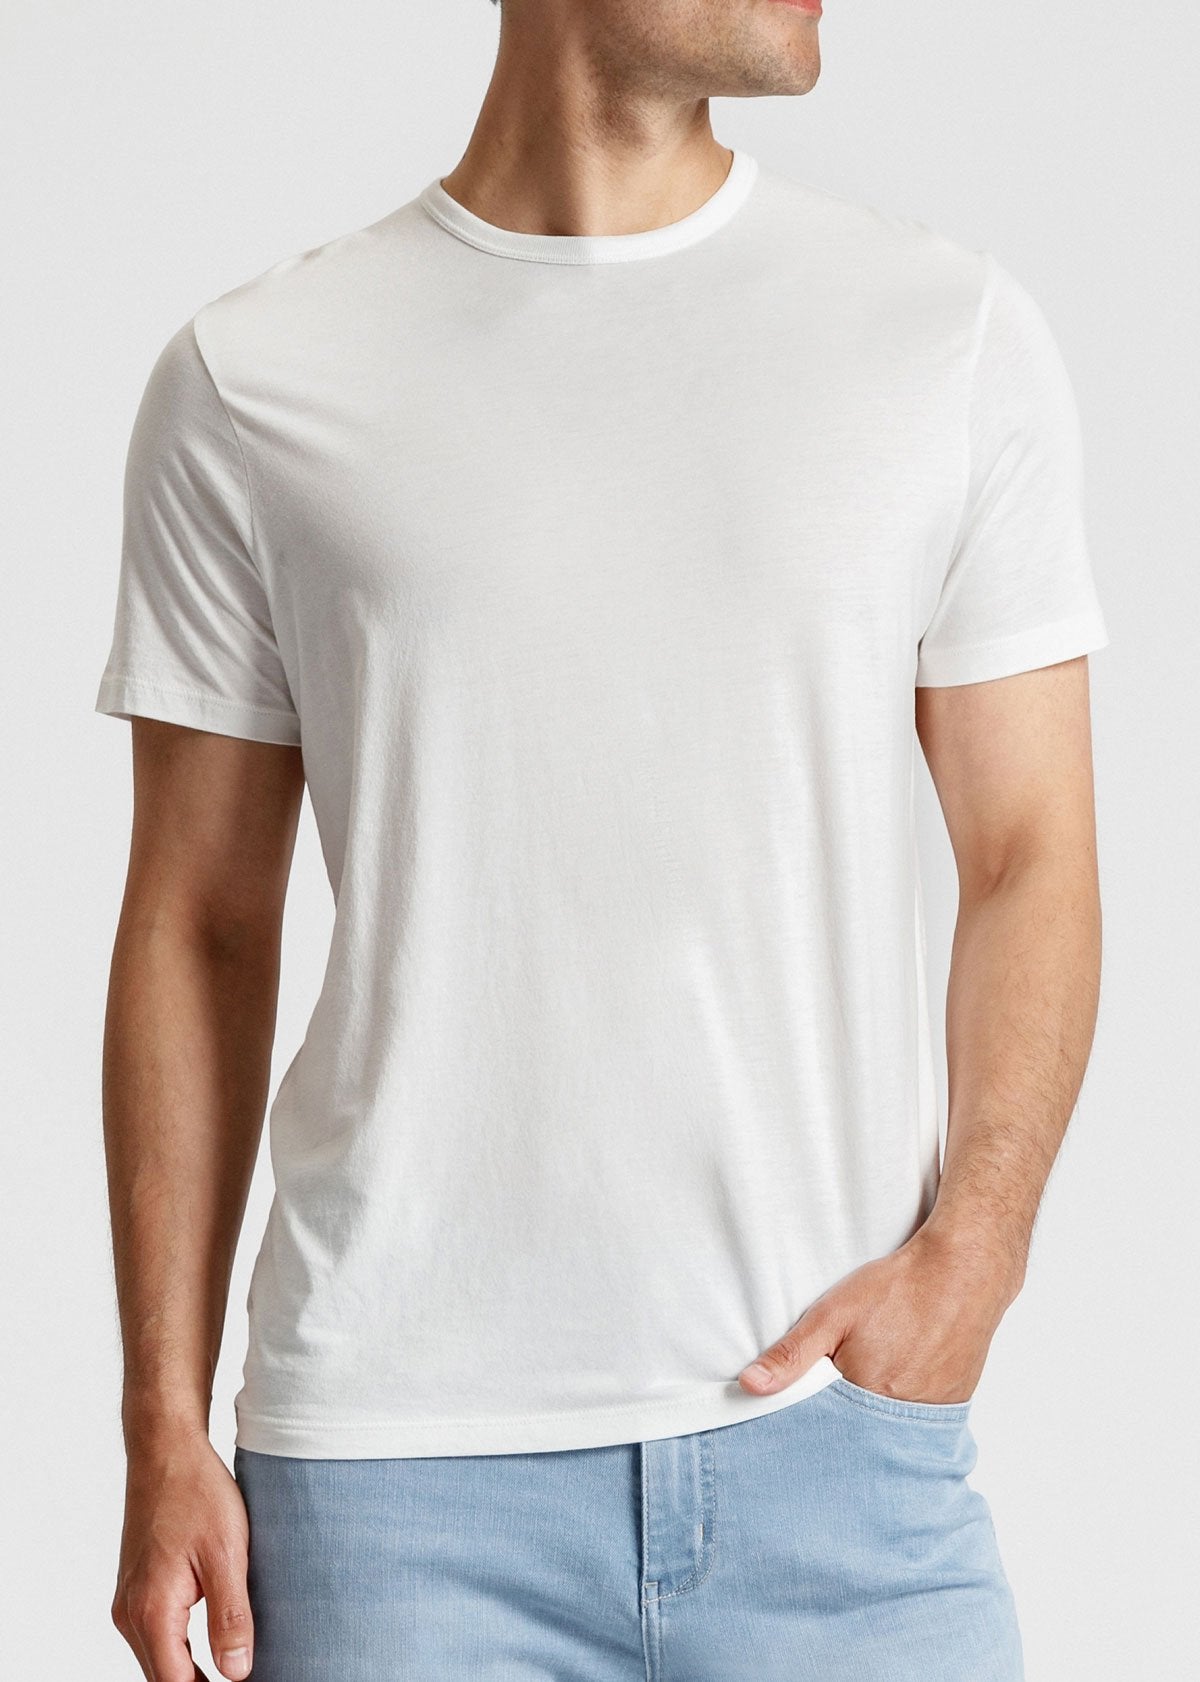 mens soft lightweight t shirt white front